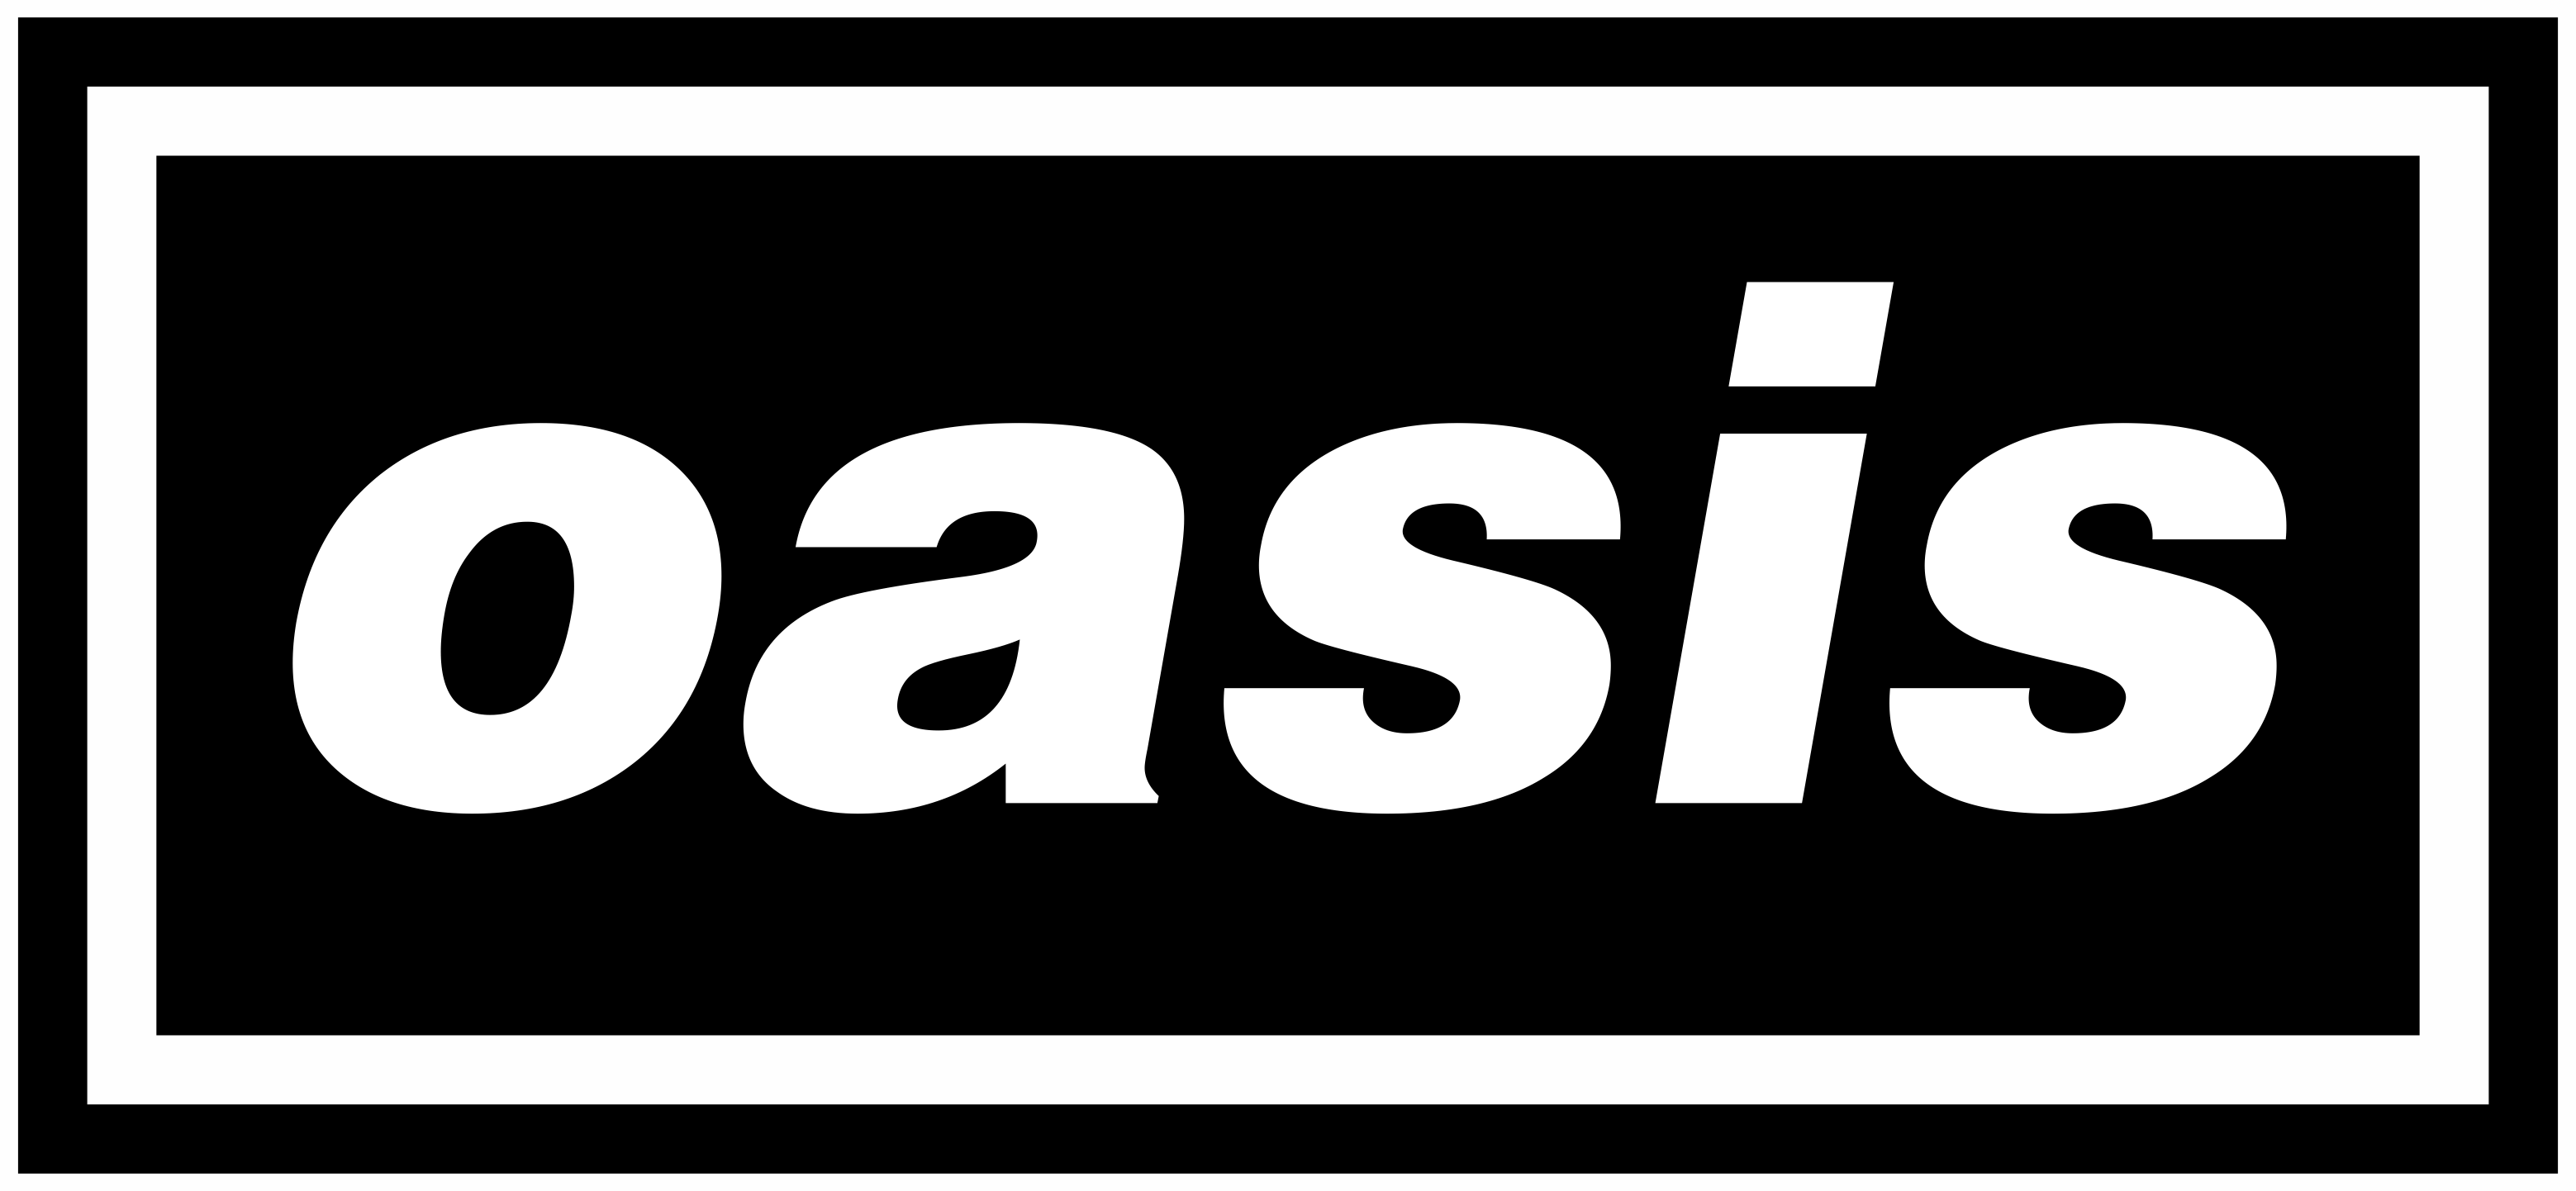 Oais Logo - Anyone else really love the simplicity of the original Oasis logo ...